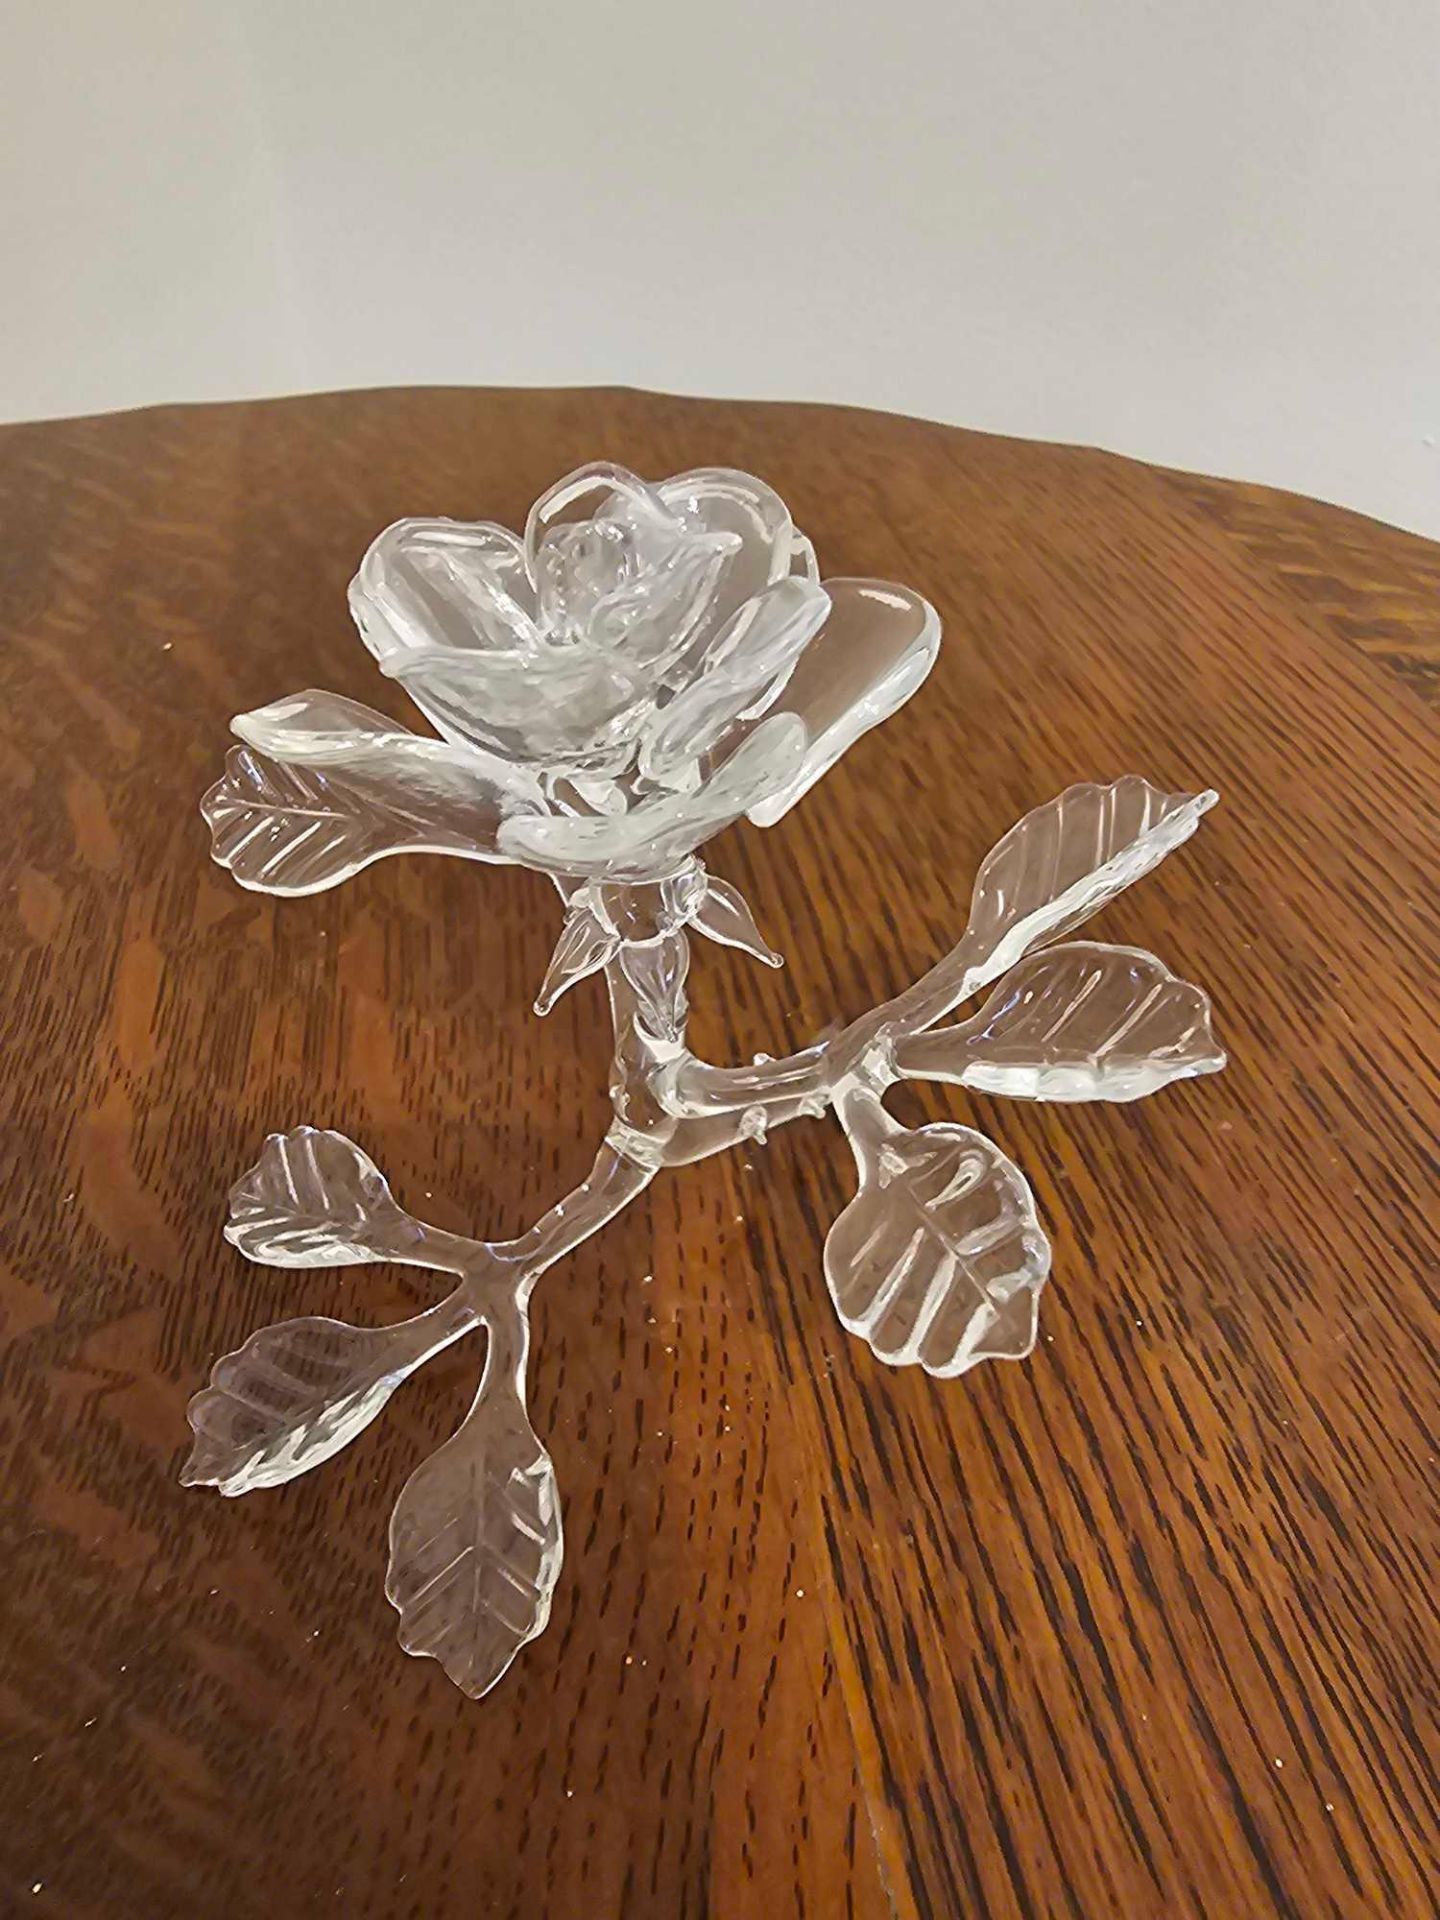 A Swarovski Crystal Rose And A Swarovski Crystal Water Lily (A/F) - Image 3 of 5